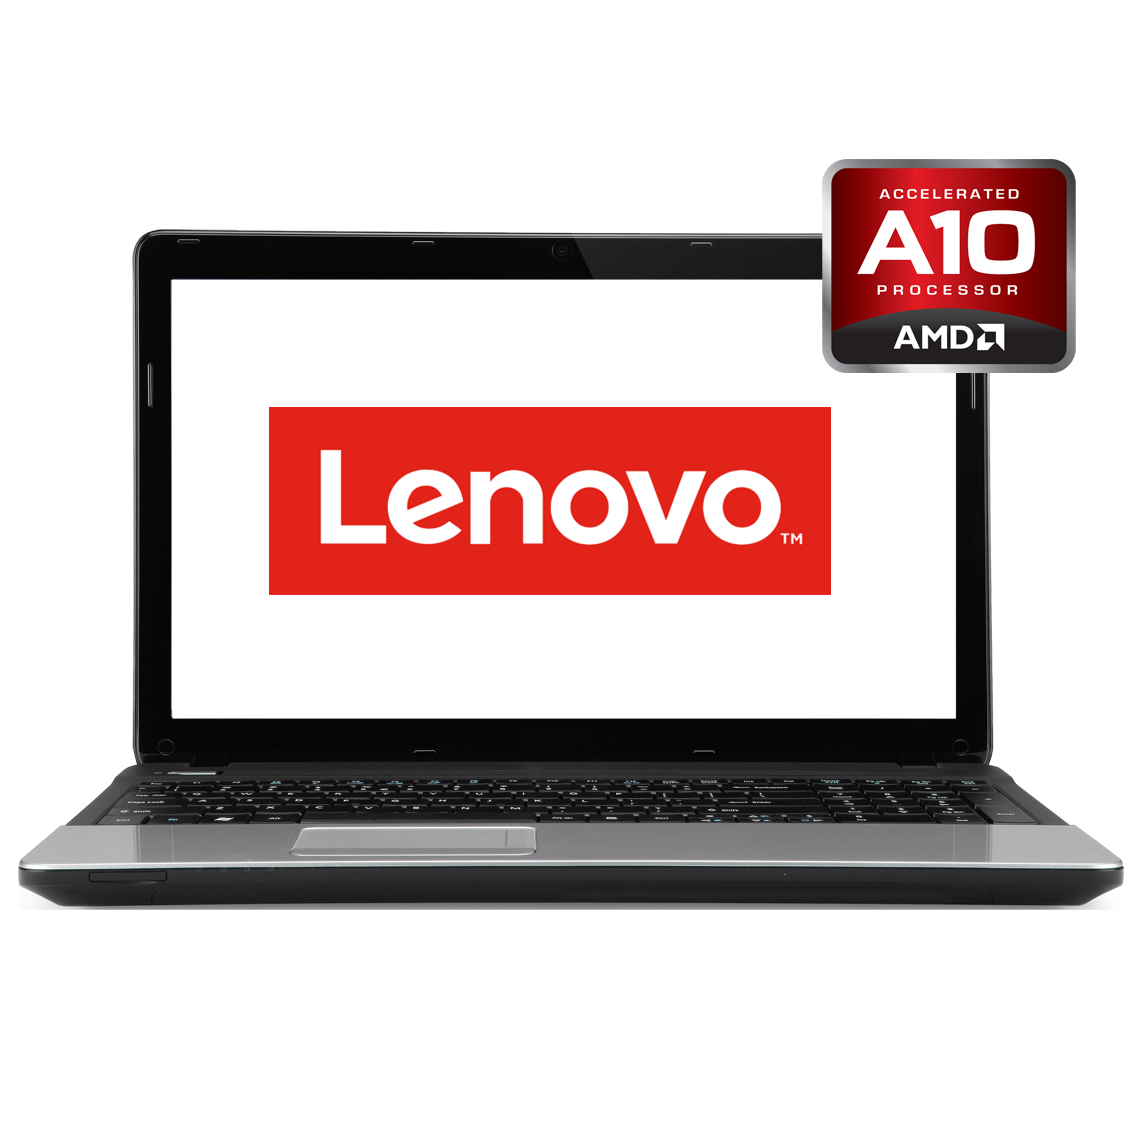 Lenovo - 17.3 inch AMD A10